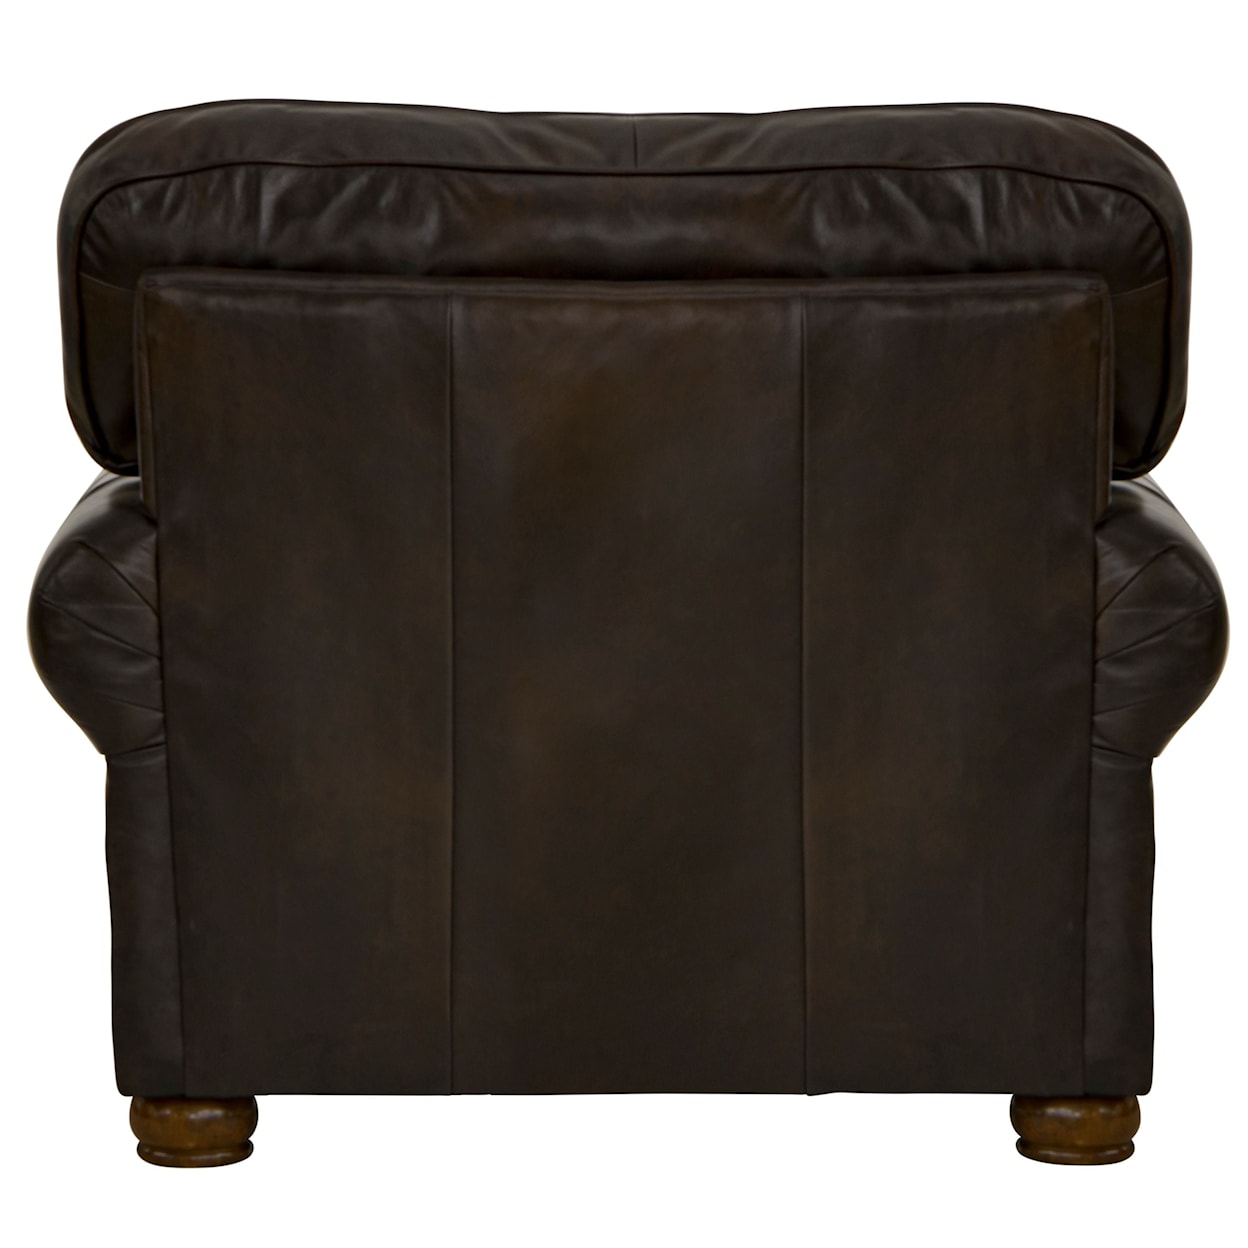 Jackson Furniture 5241 Roberto Chair